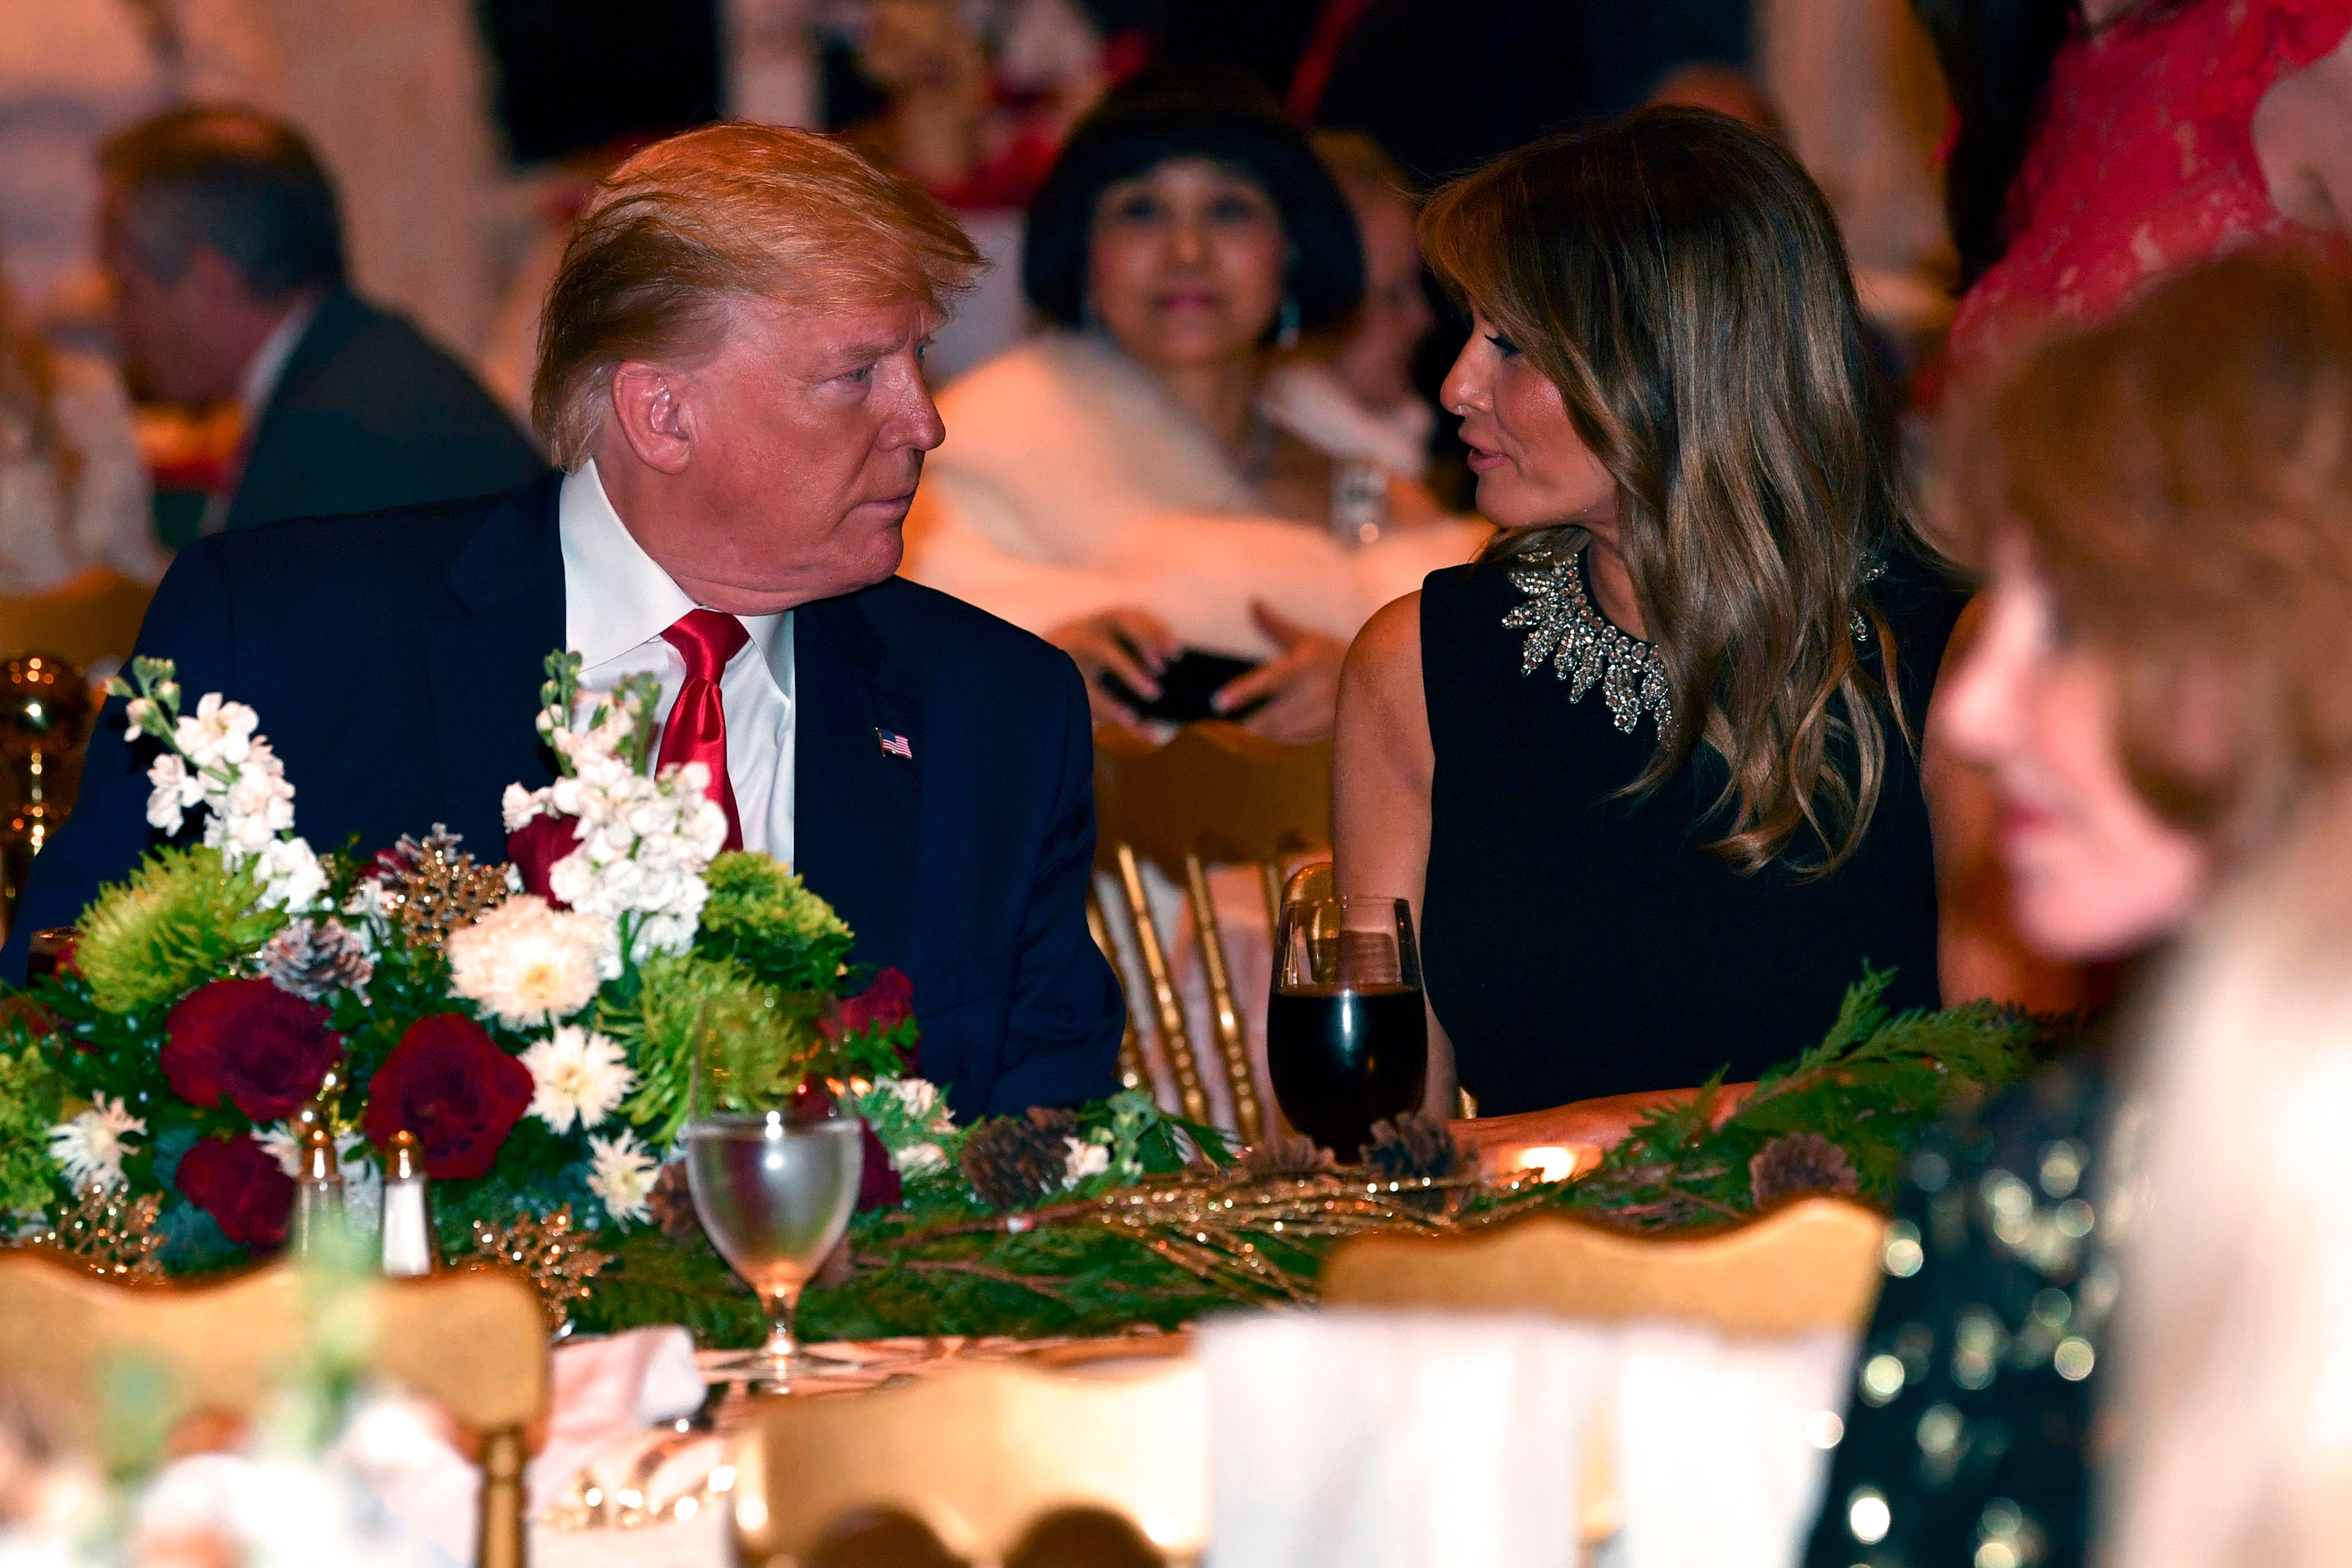 President Trump often spends Christmas at Mar-a-Lago